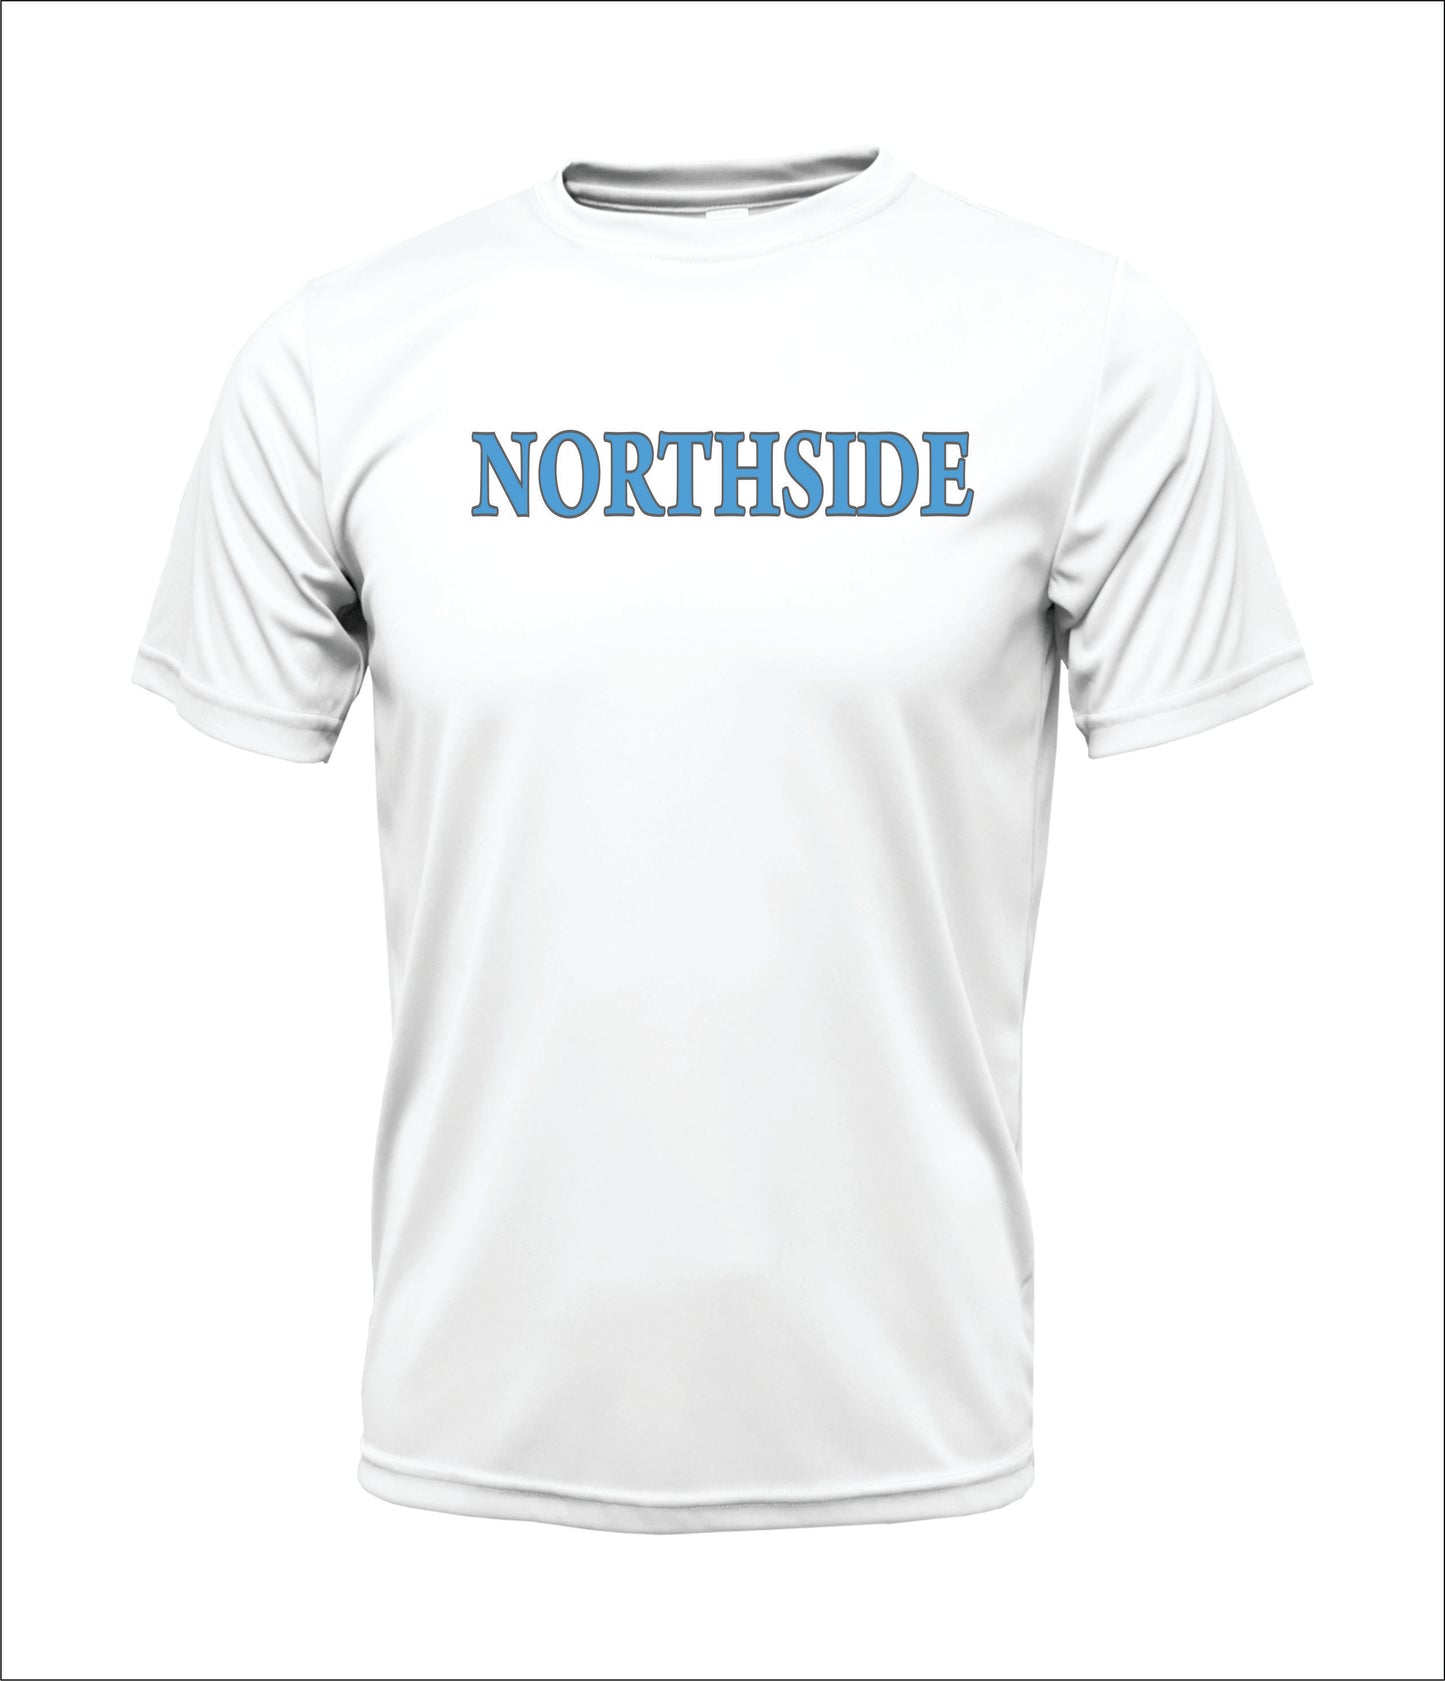 NORTHSIDE BASEBALL DRIFIT TEE WITH NORTHSIDE